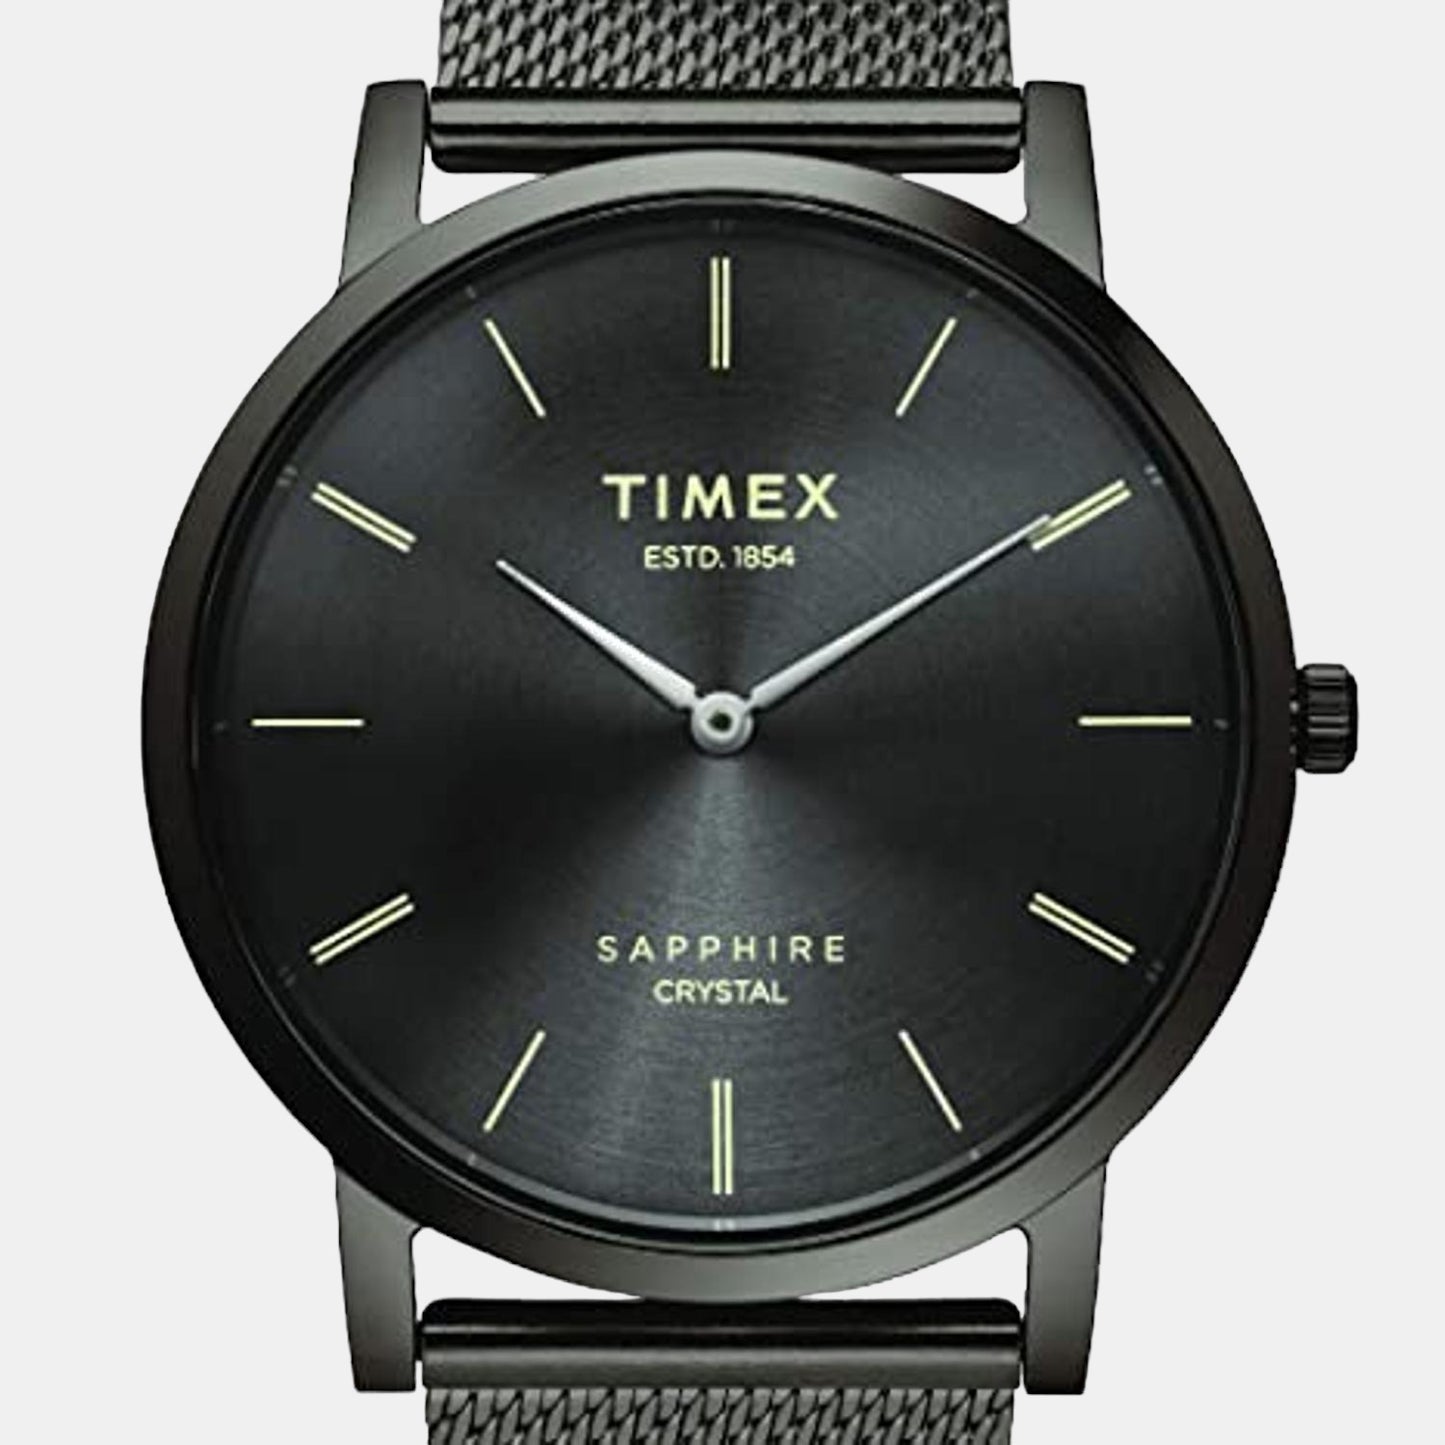 timex-grey-analog-men-watch-tweg17413